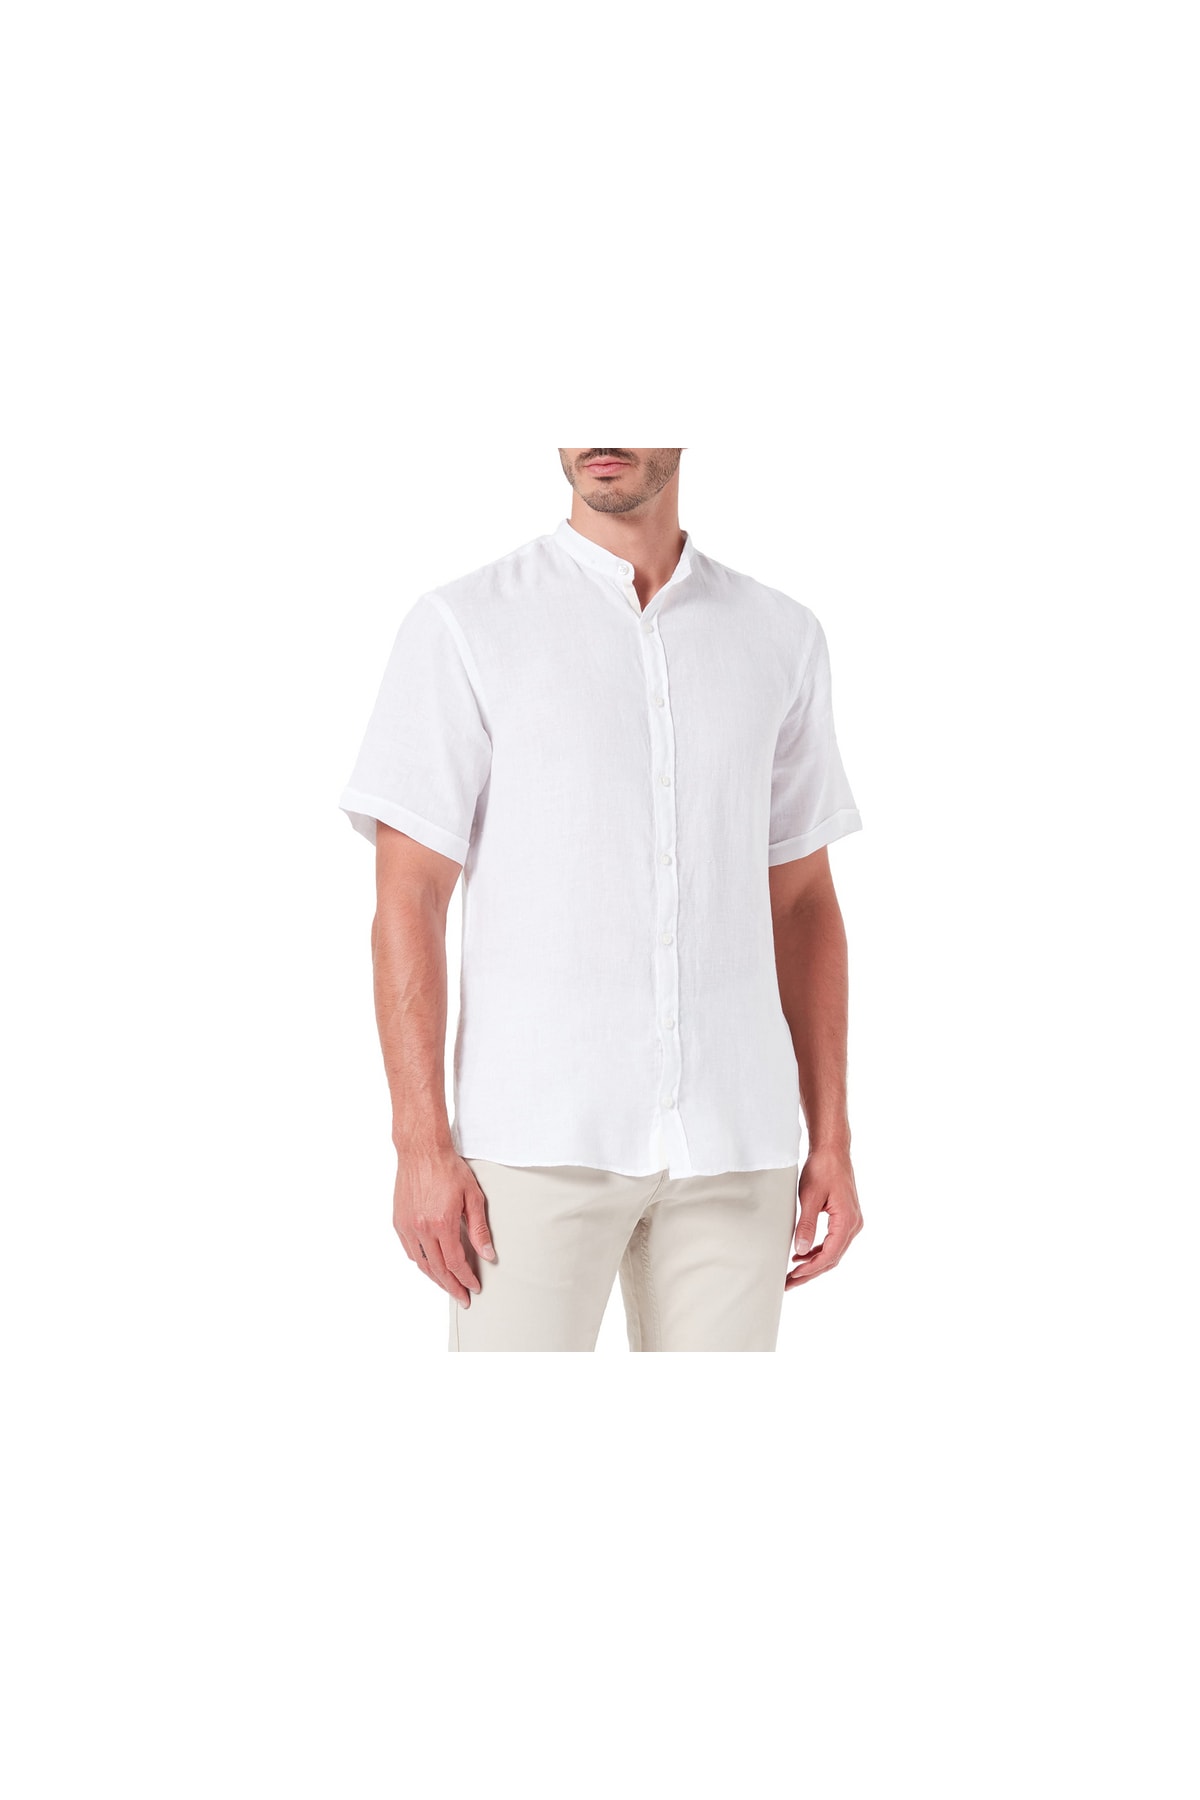 Brax Hemd Weiß Regular Fit Fast ausverkauft